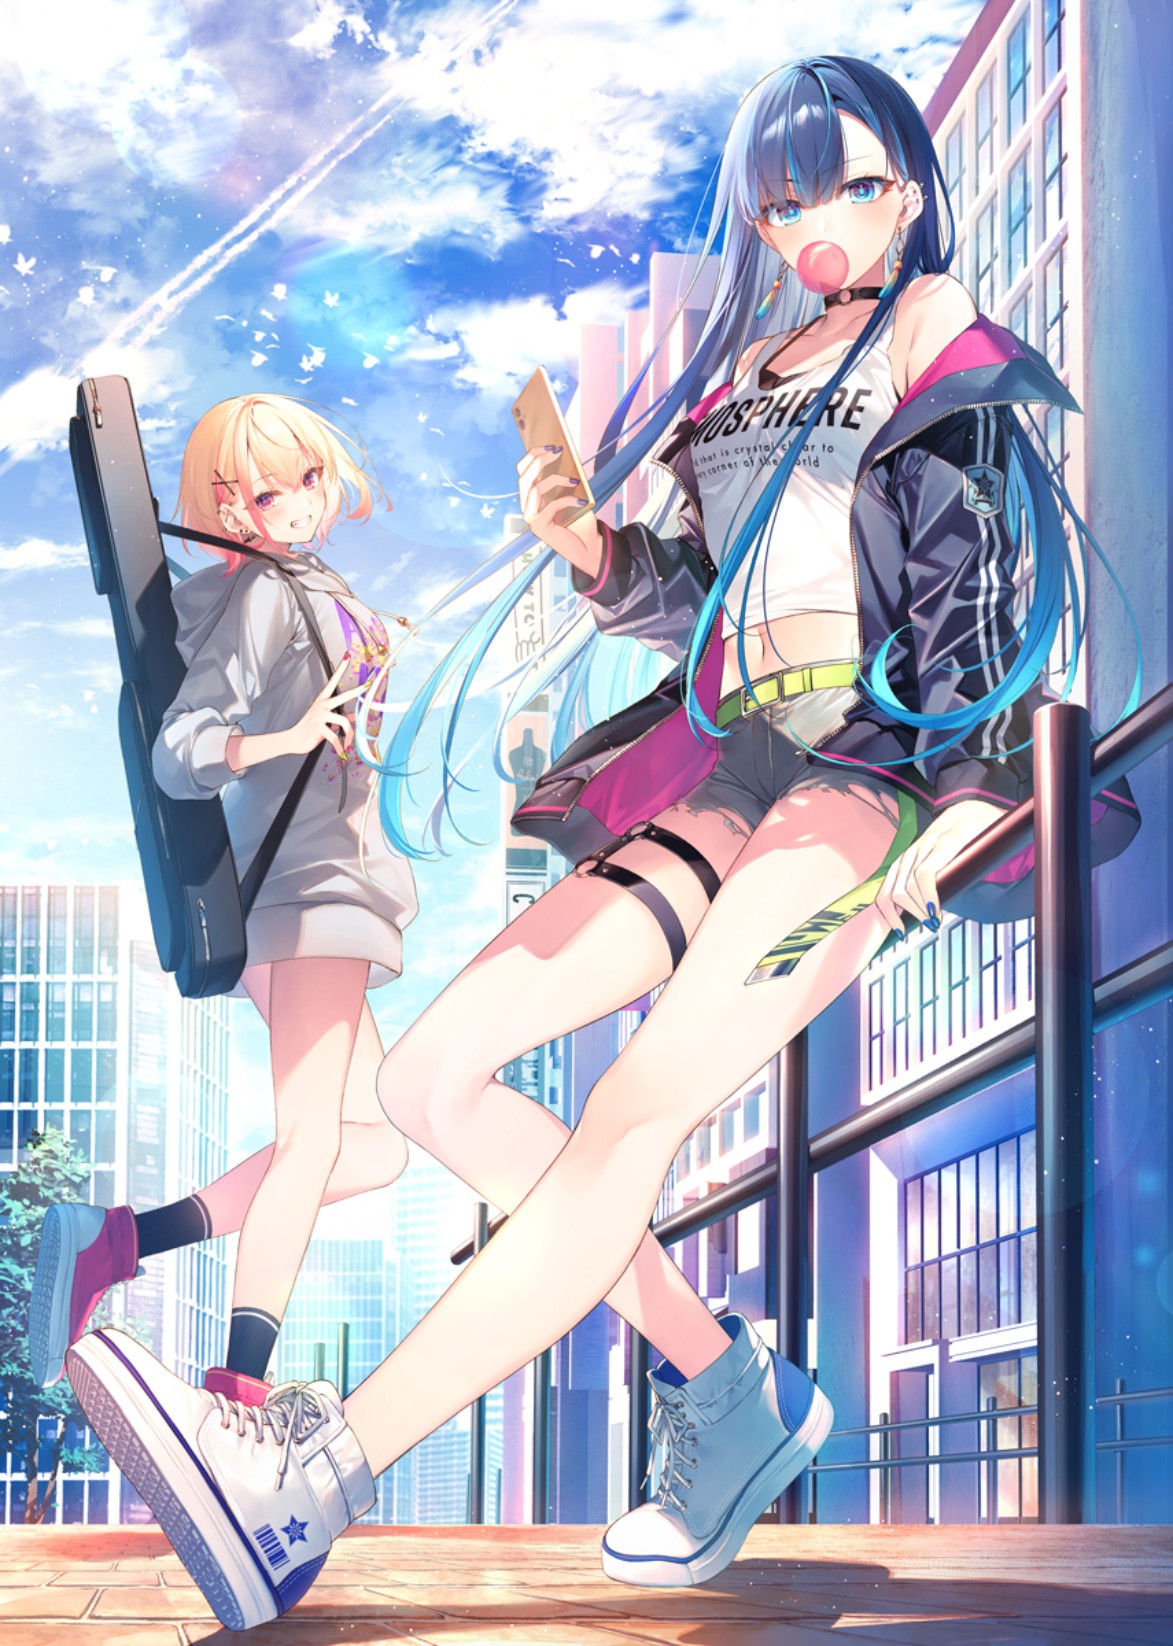 Anime Anime Girls Portrait Display Sky Clouds Bubblegum Long Hair Sunlight Building Looking At Viewe 1173x1646